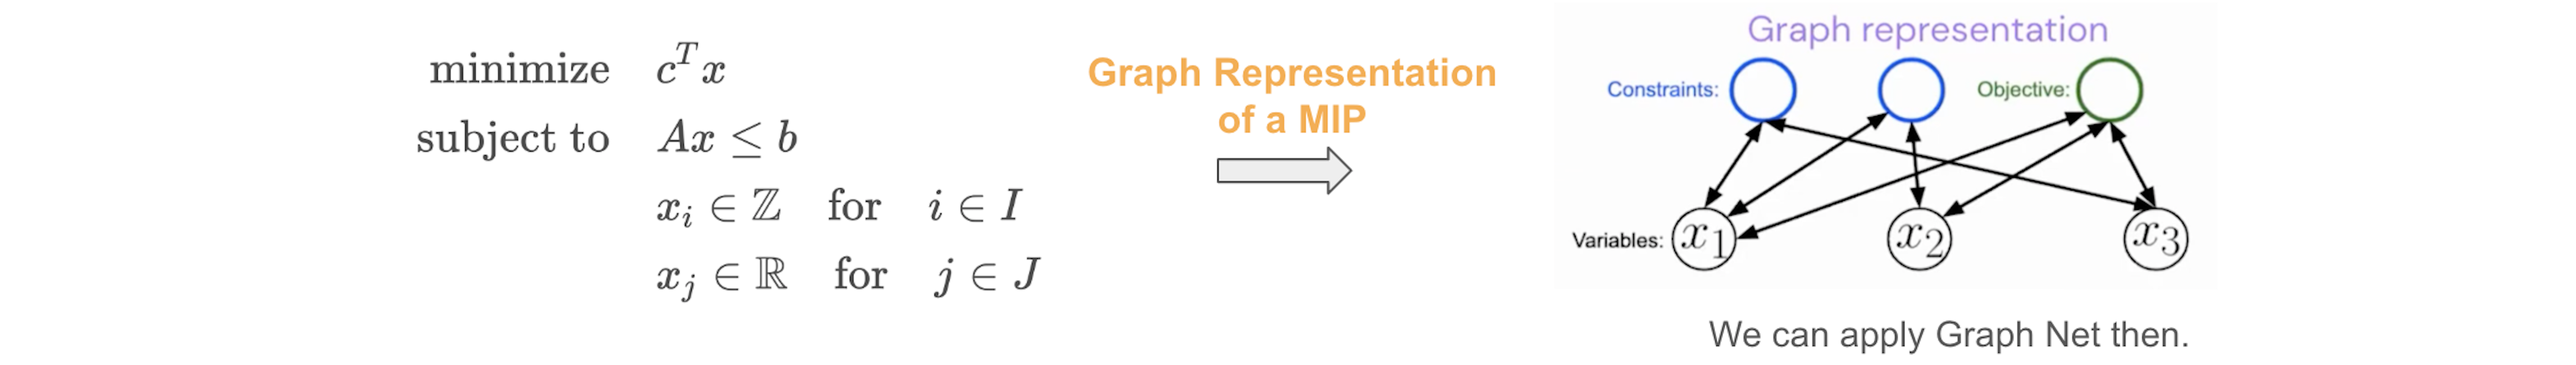 Graph Representation of MIPs